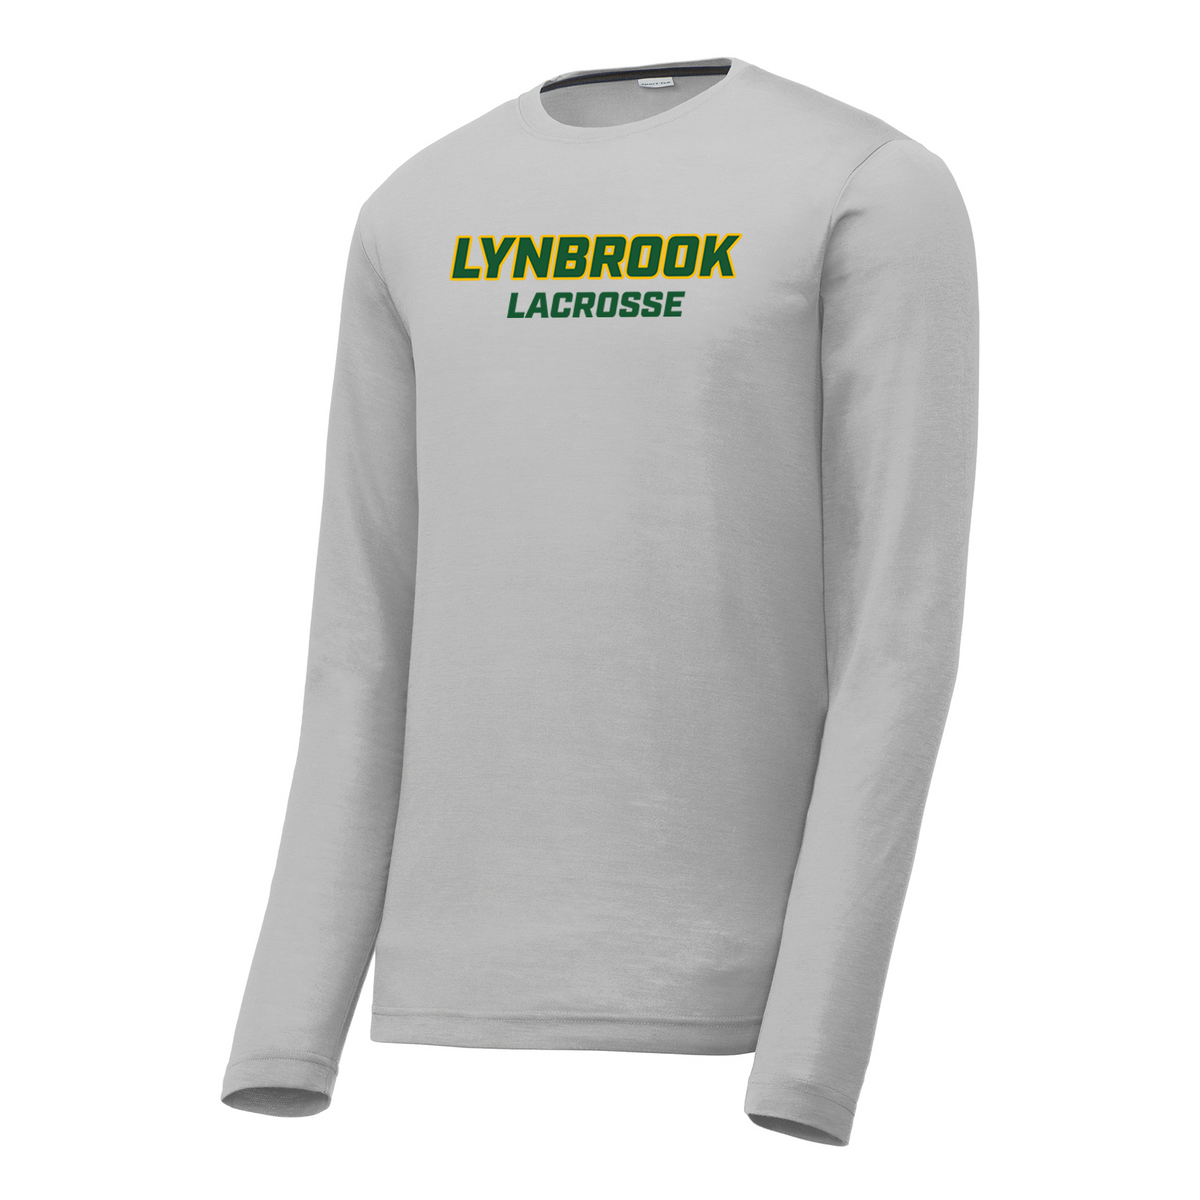 Lynbrook PAL Lacrosse Long Sleeve CottonTouch Performance Shirt